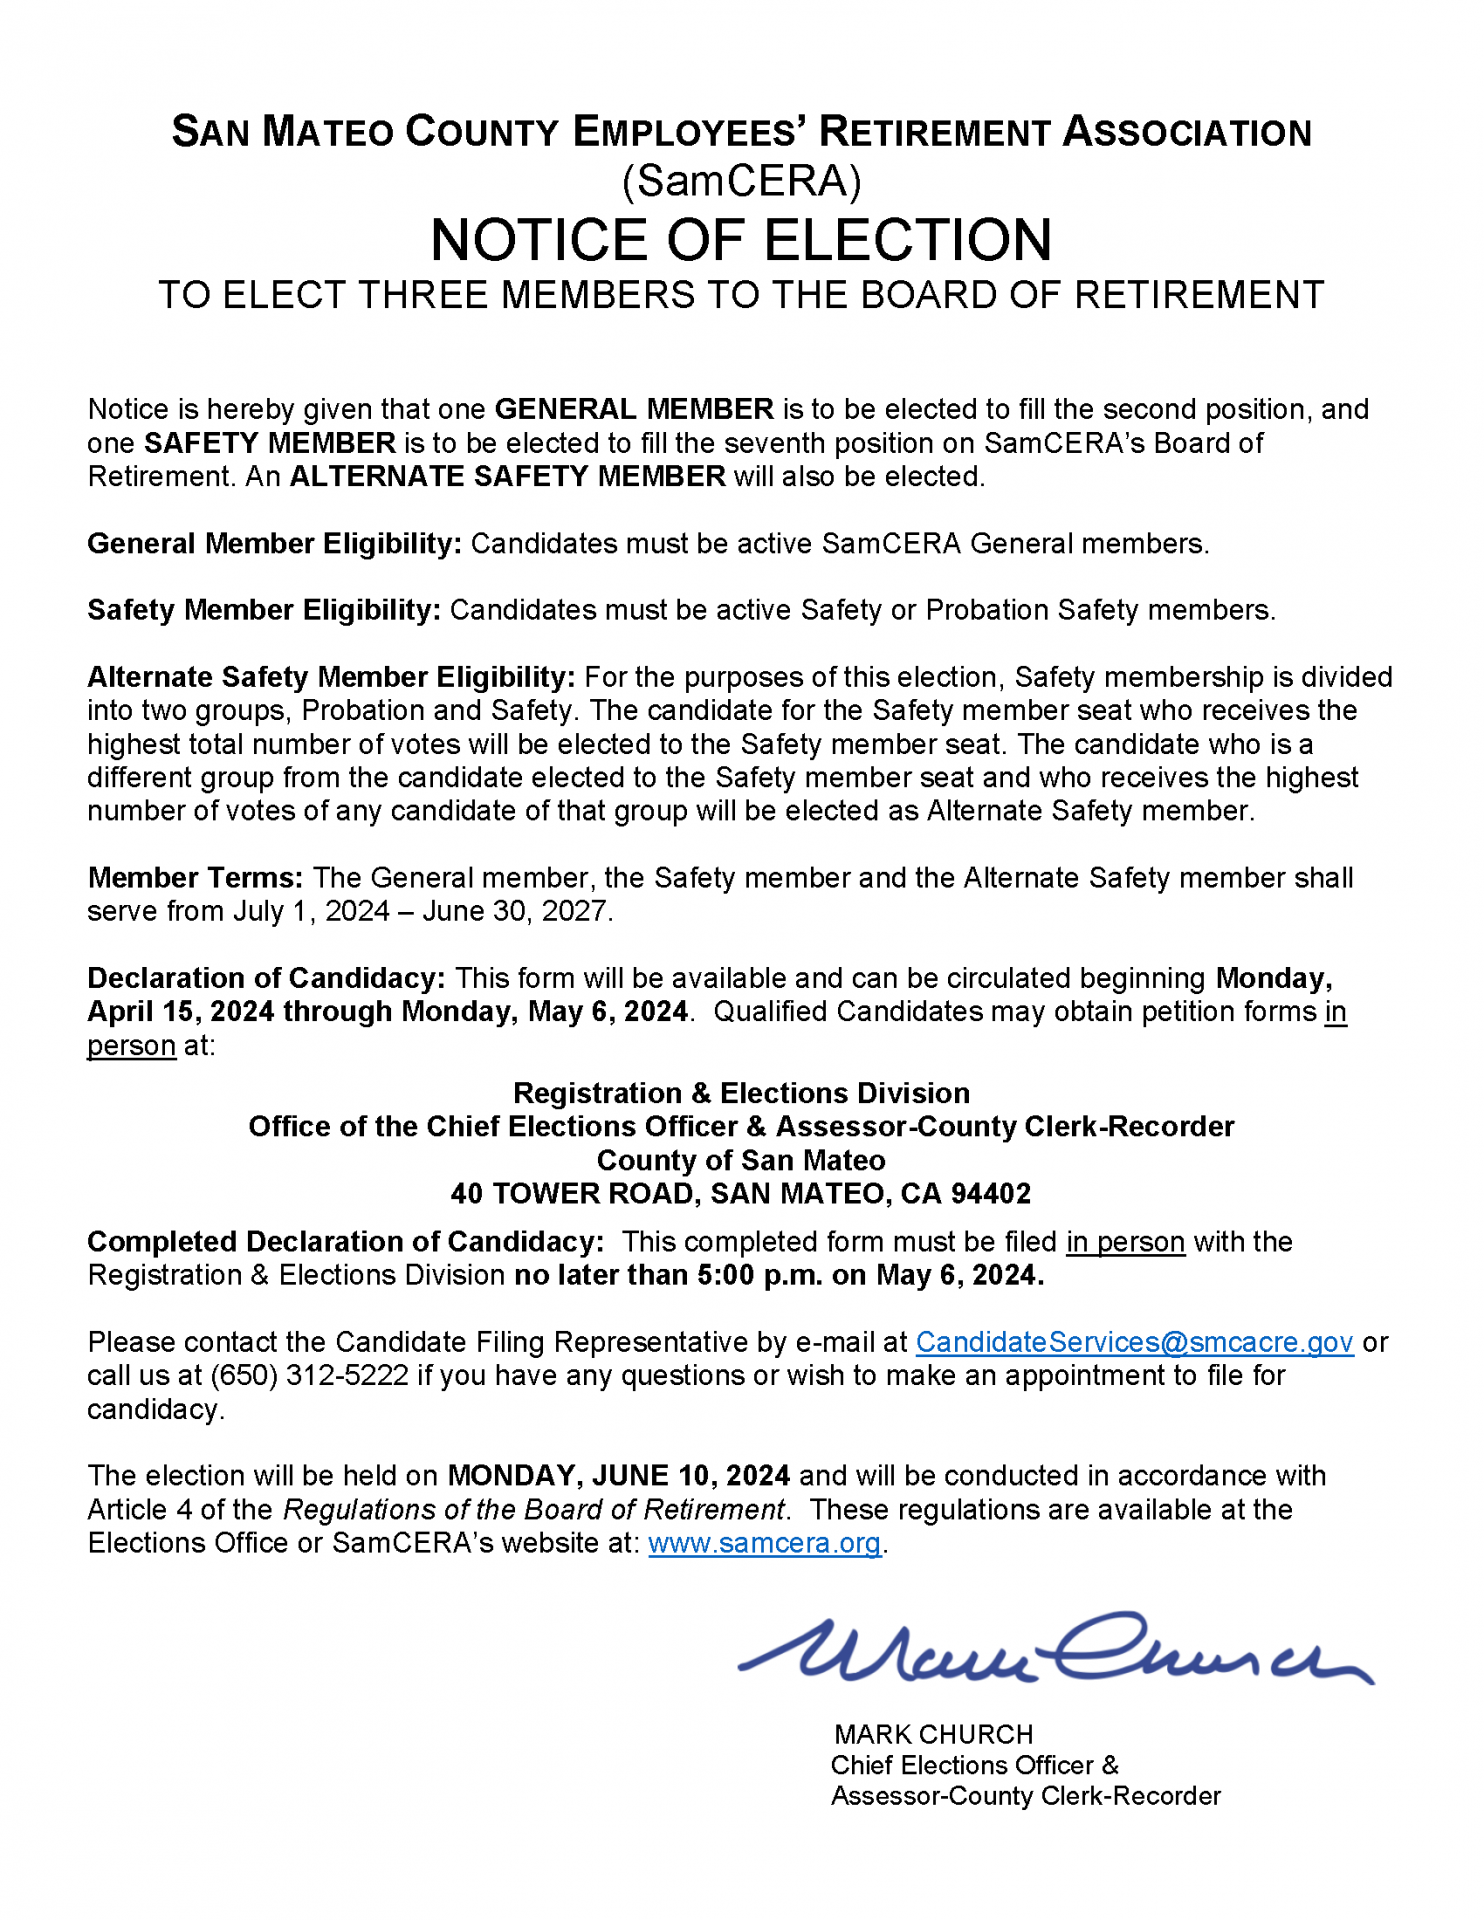 2022 Notice of Election for SamCERA Board of Retirement